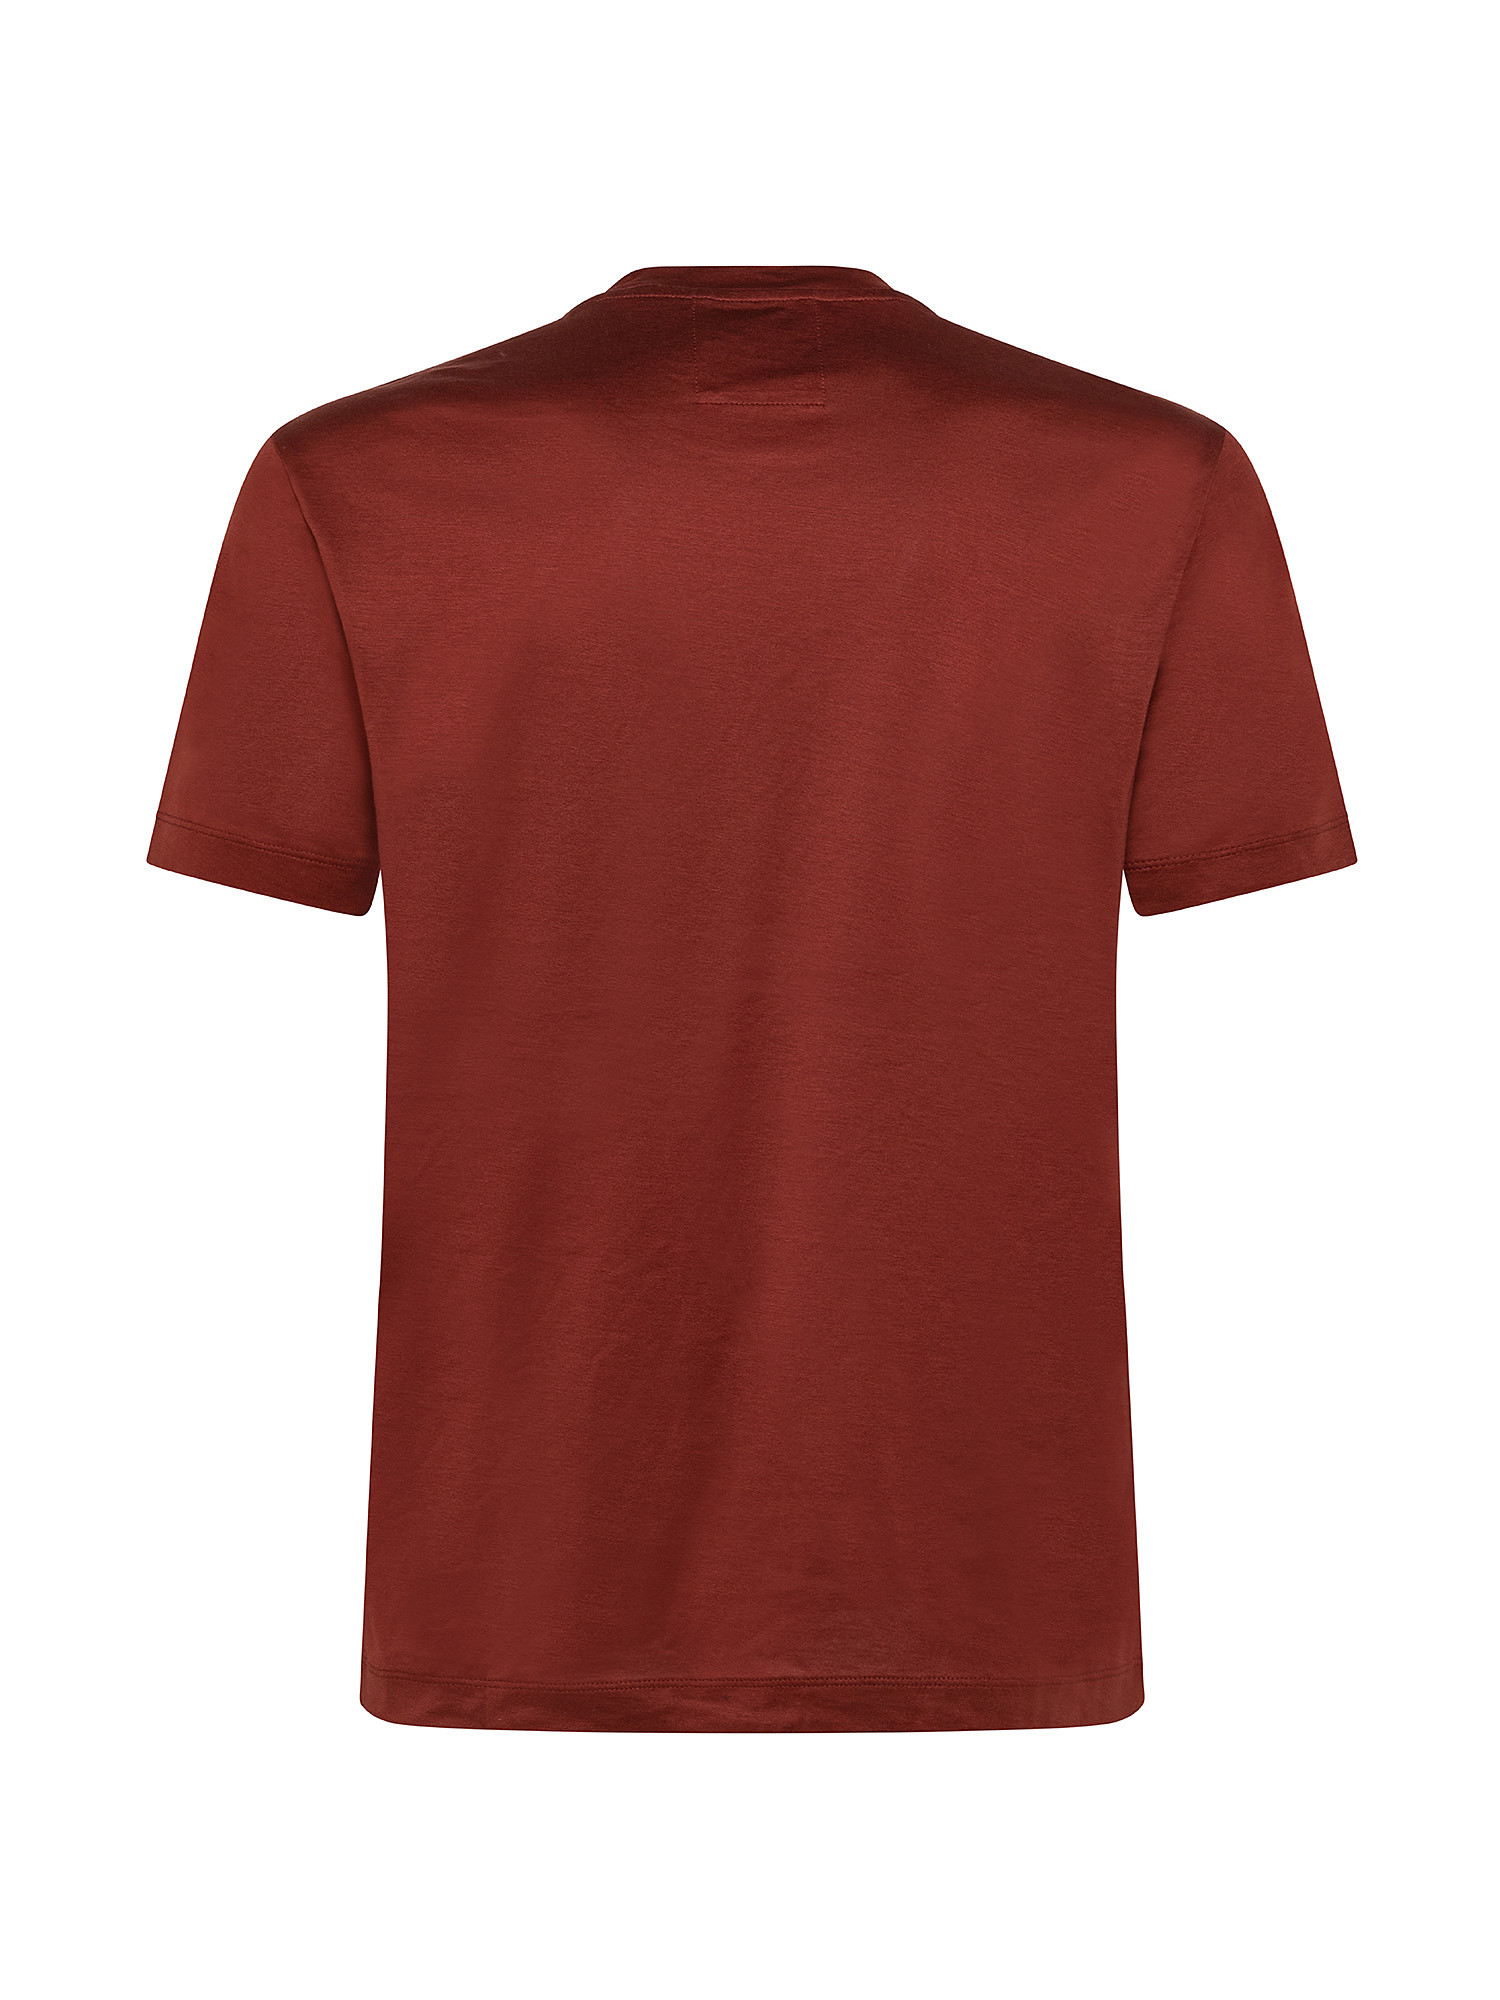 Logo t-shirt, Brick Red, large image number 1